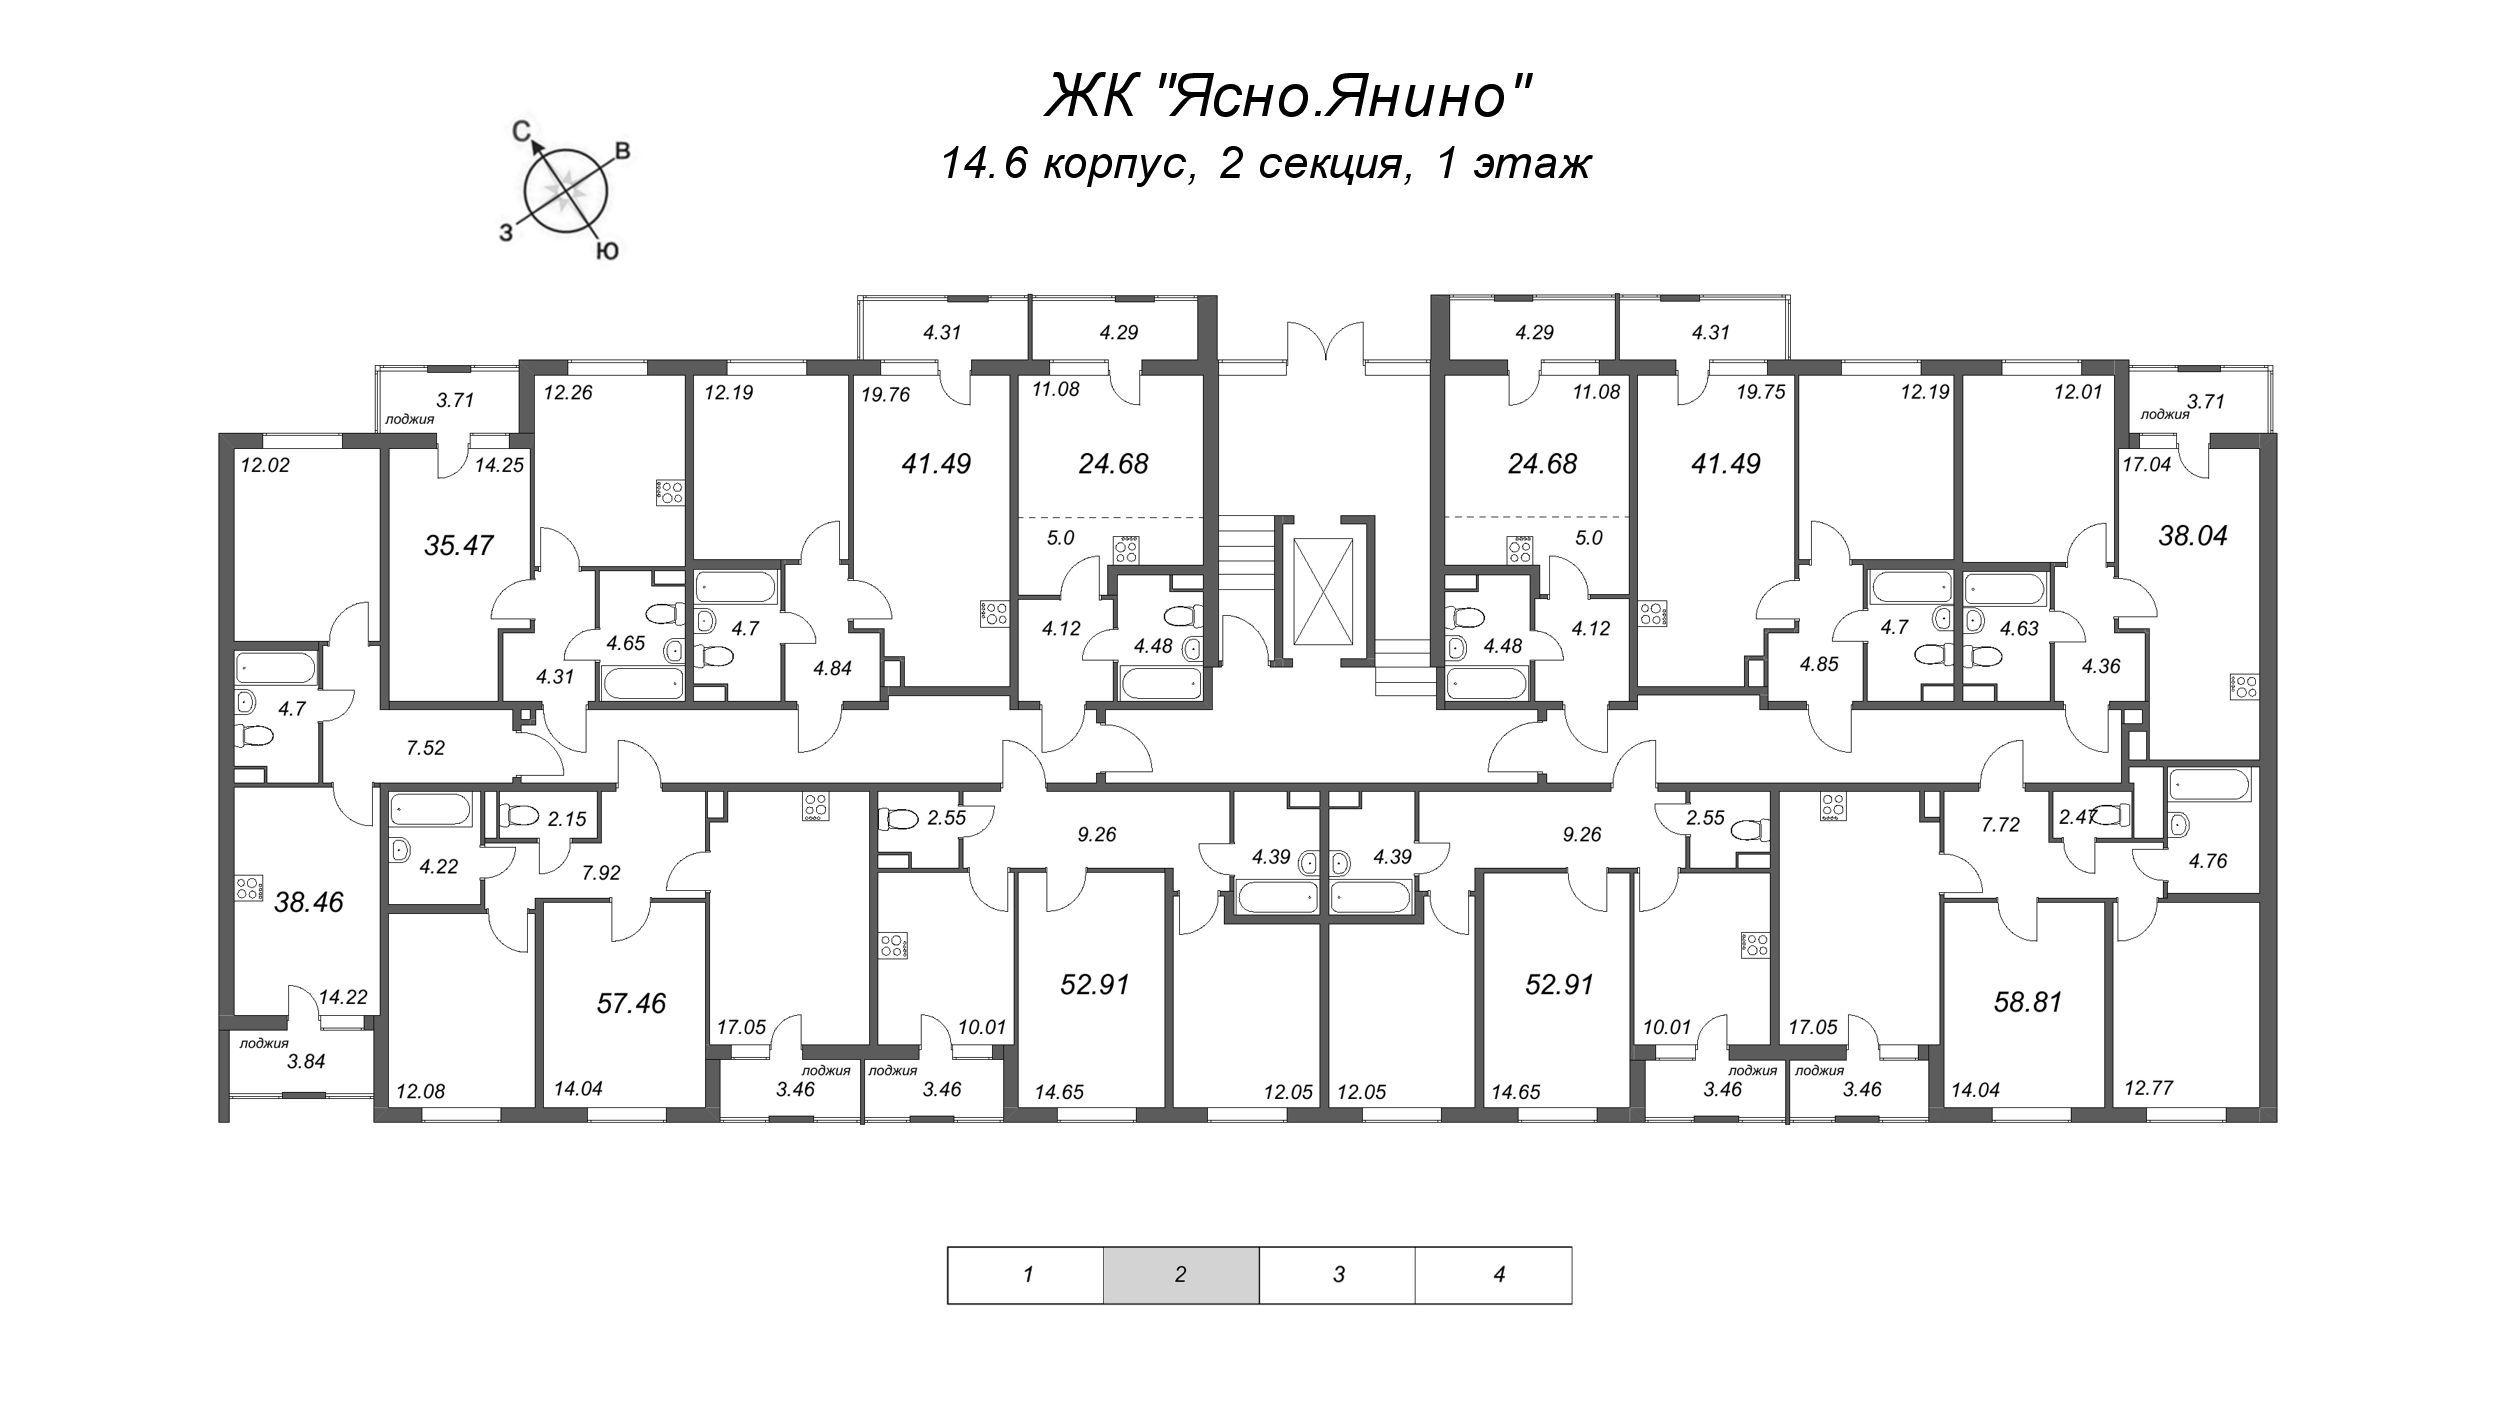 2-комнатная (Евро) квартира, 38.04 м² - планировка этажа